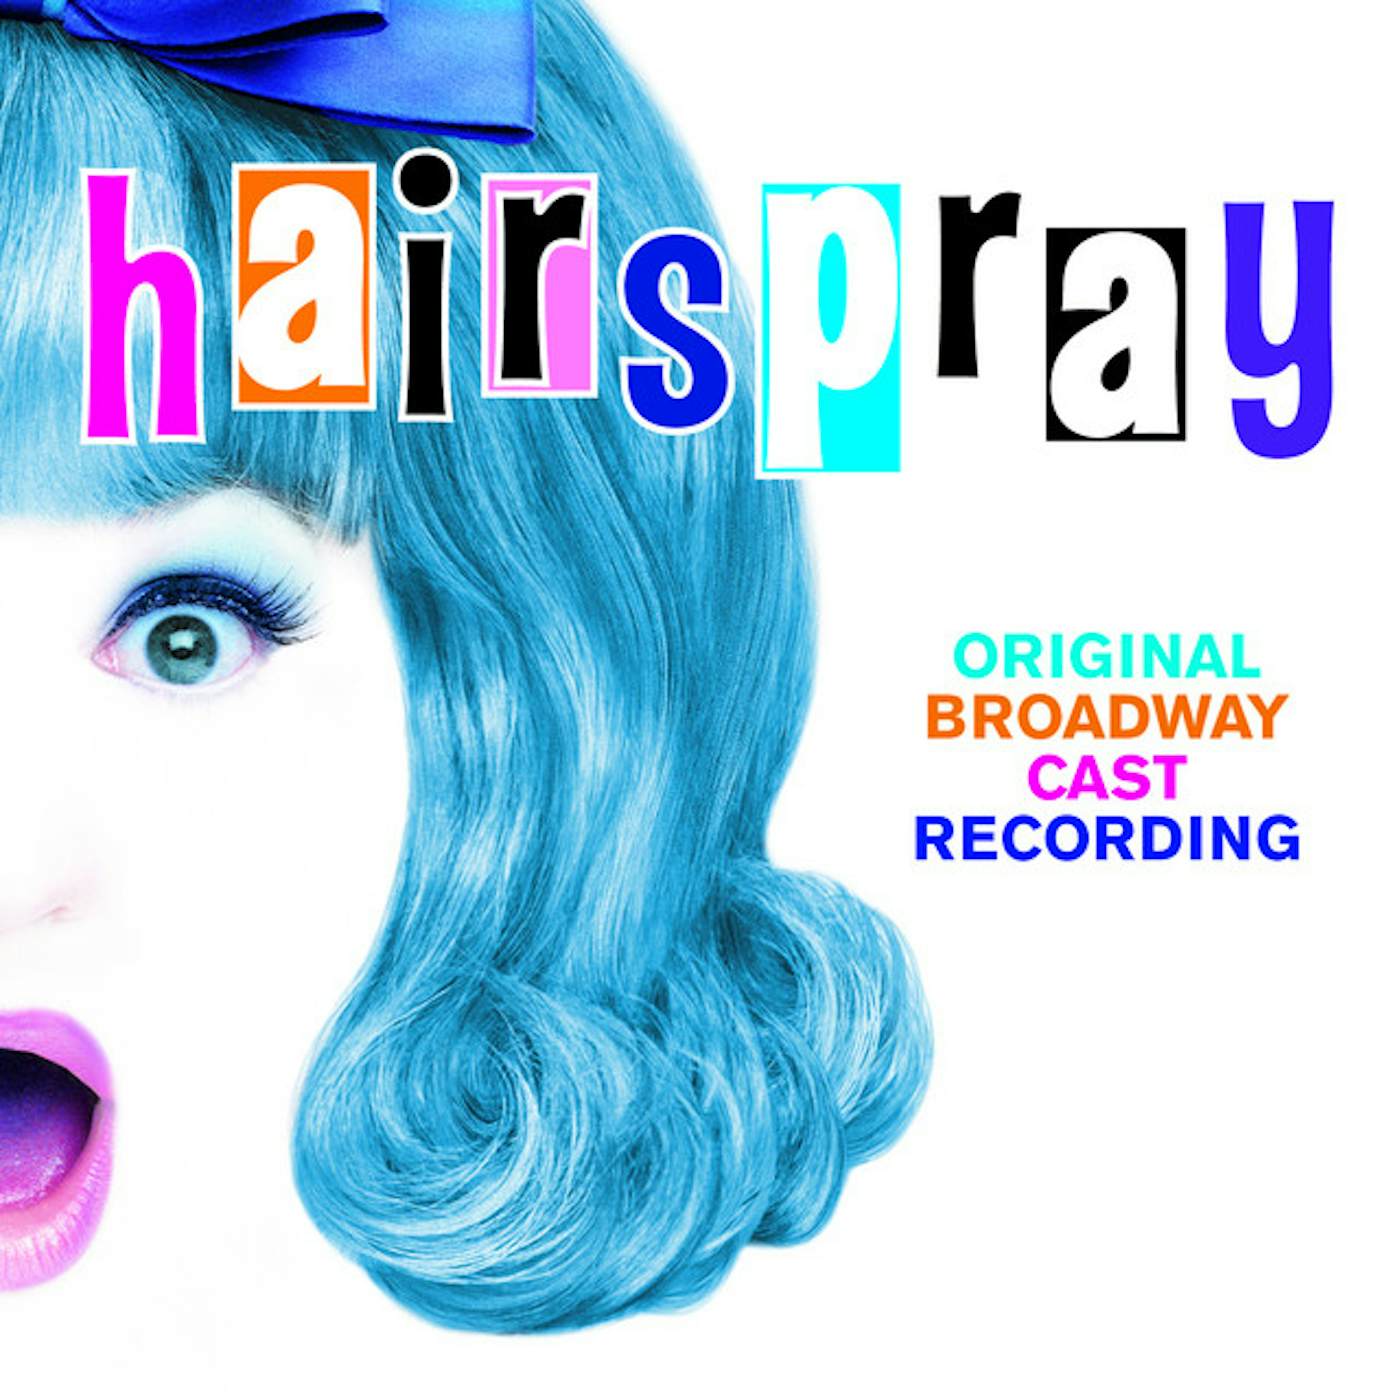 HAIRSPRAY / O.B.C.R. Hairspray (Original Broadway Album) / O.B.C.R. Vinyl Record